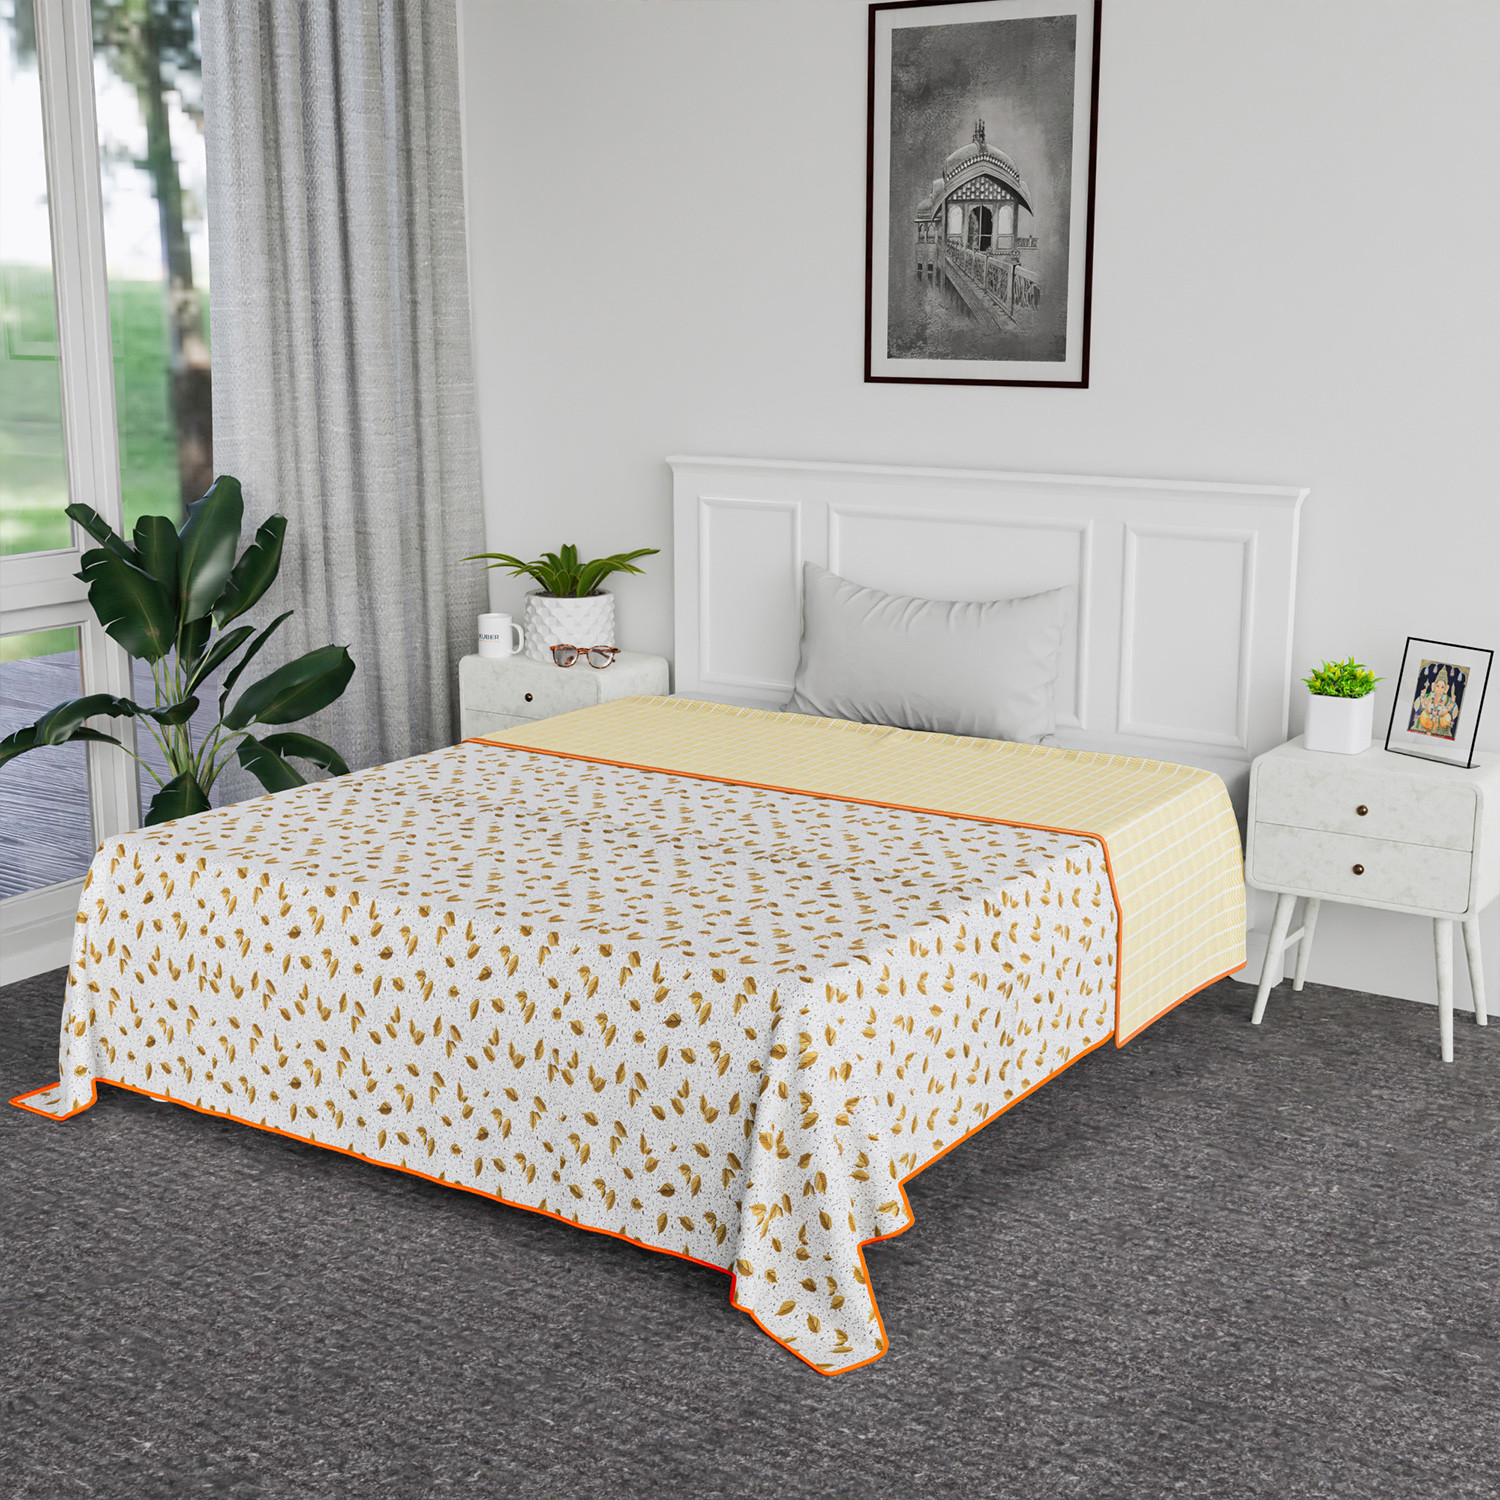 Kuber Industries Blanket | Cotton Single Bed Dohar | Blanket For Home | Reversible AC Blanket For Travelling | Blanket For Summer | Blanket For Winters | Leaf Print | Brown